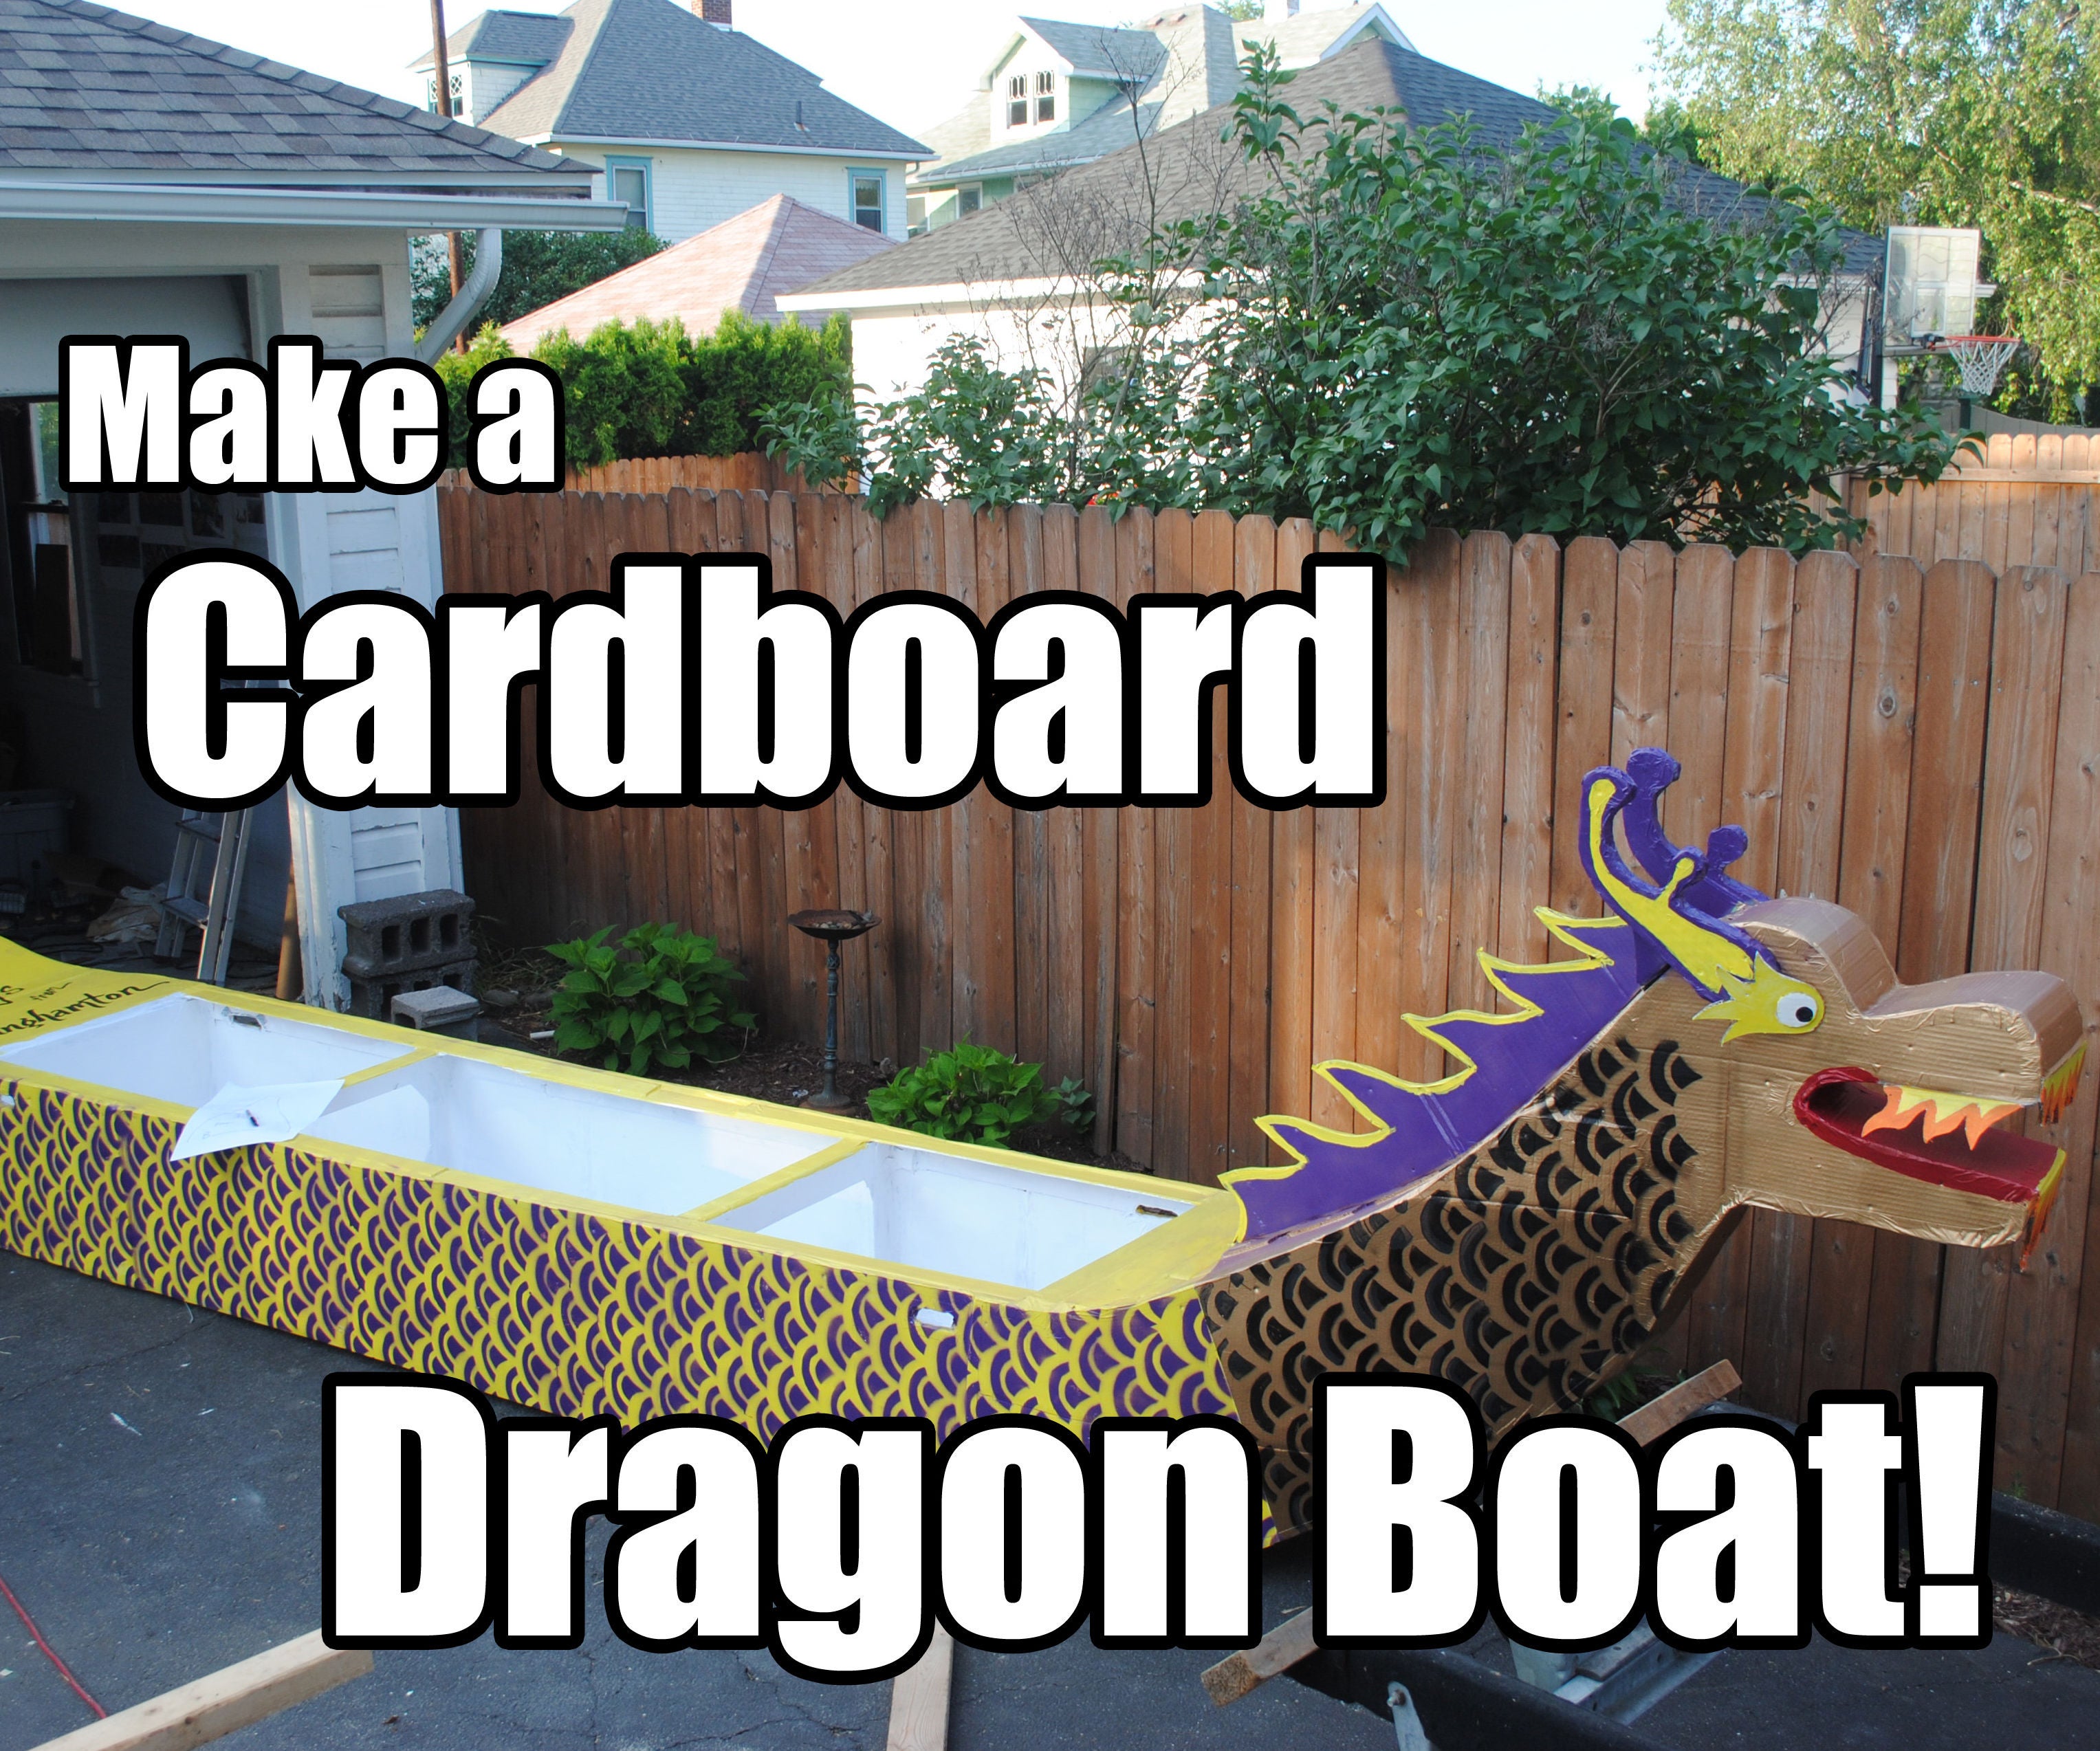 Make a Cardboard Dragon Boat!